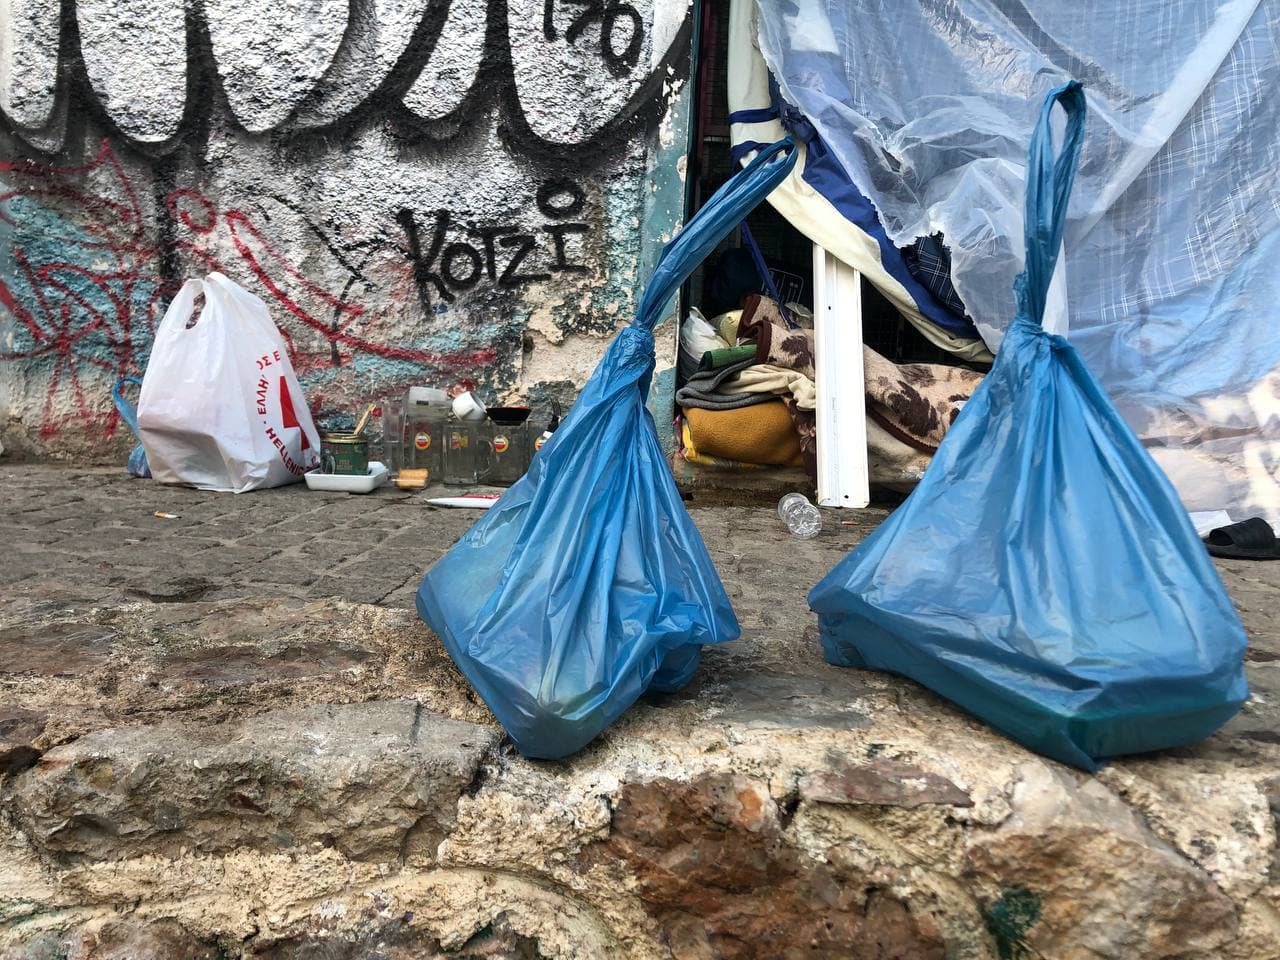 Street Workers - Οι άστεγοι της Αθήνας δεν είναι μόνοι τους - «Όταν οι άλλοι μένουν μέσα, εμείς βγαίνουμε έξω»